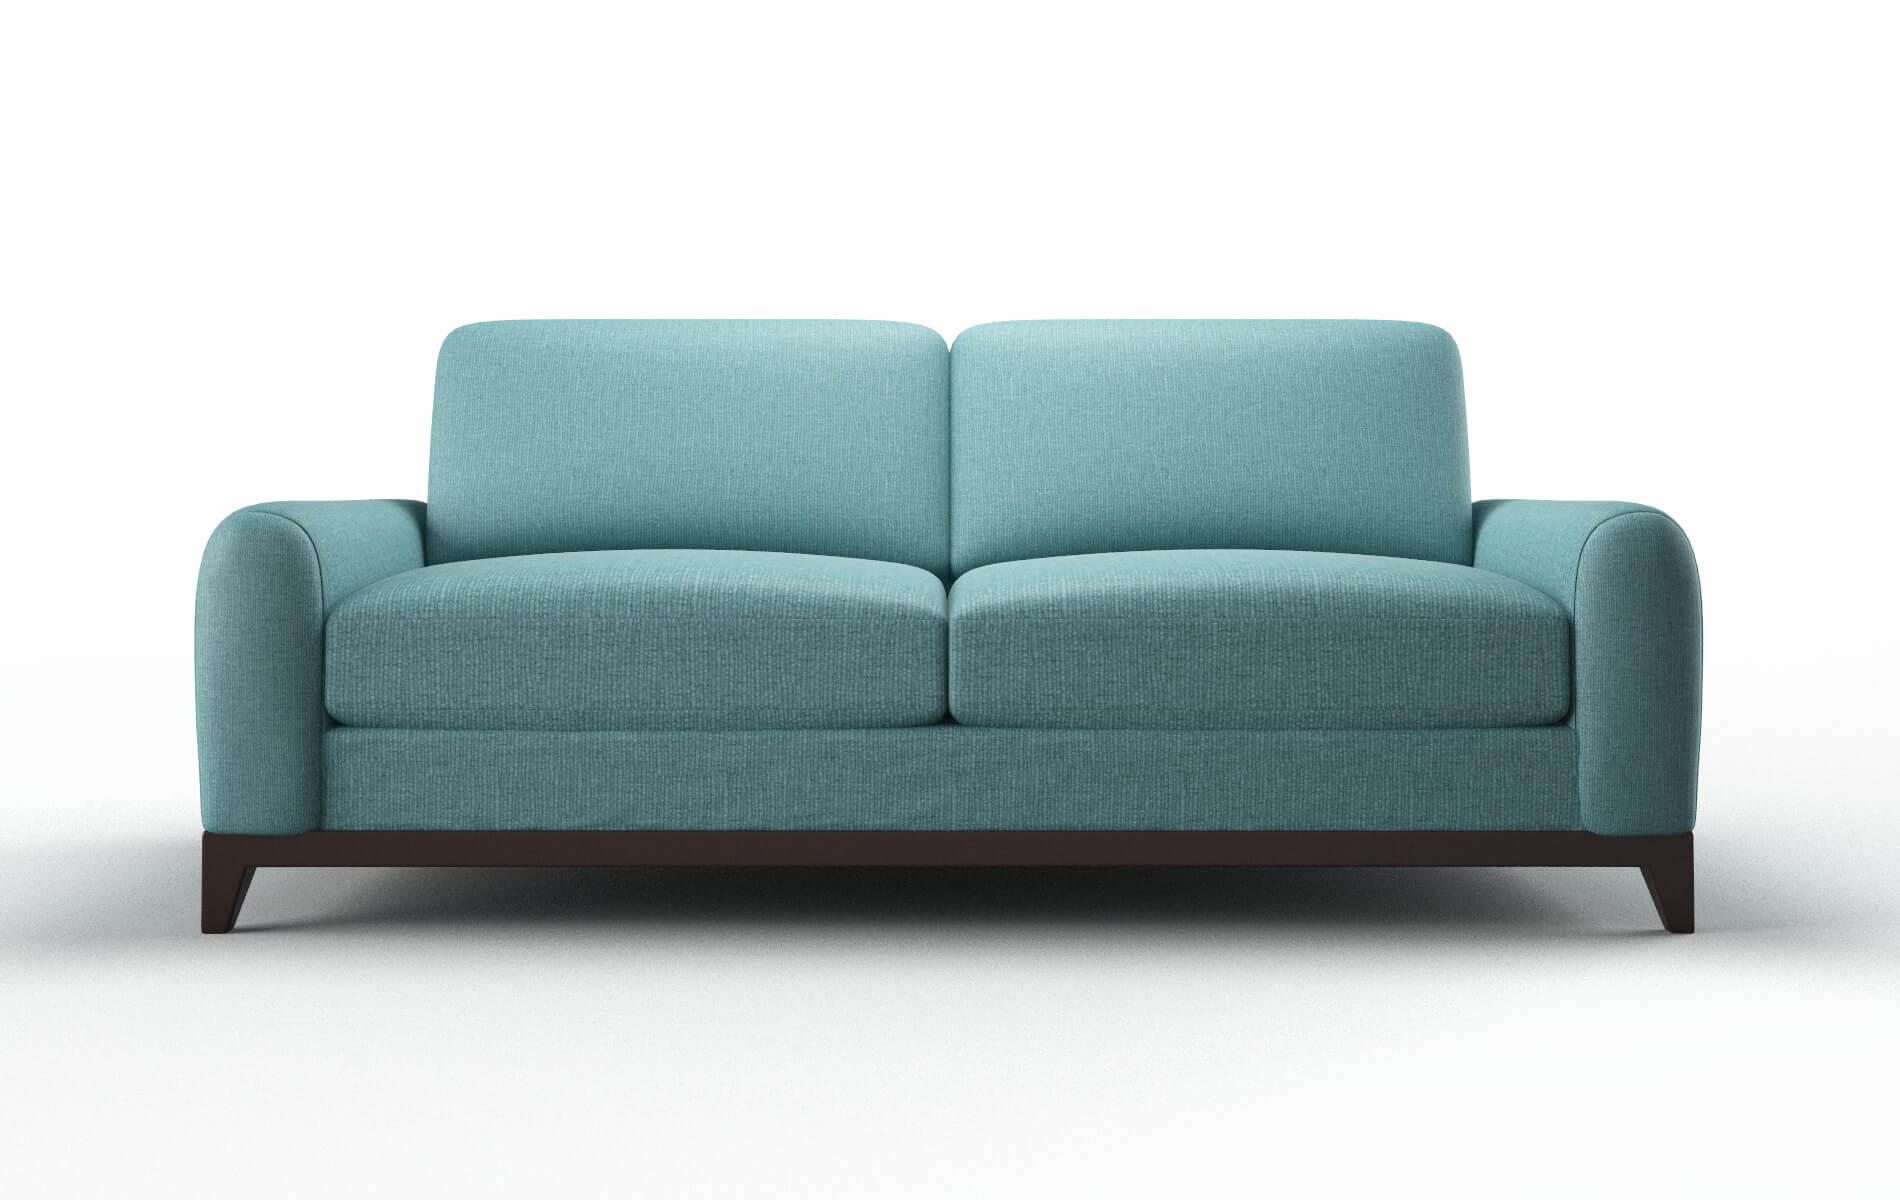 Mykonos Parker Turquoise Sofa espresso legs